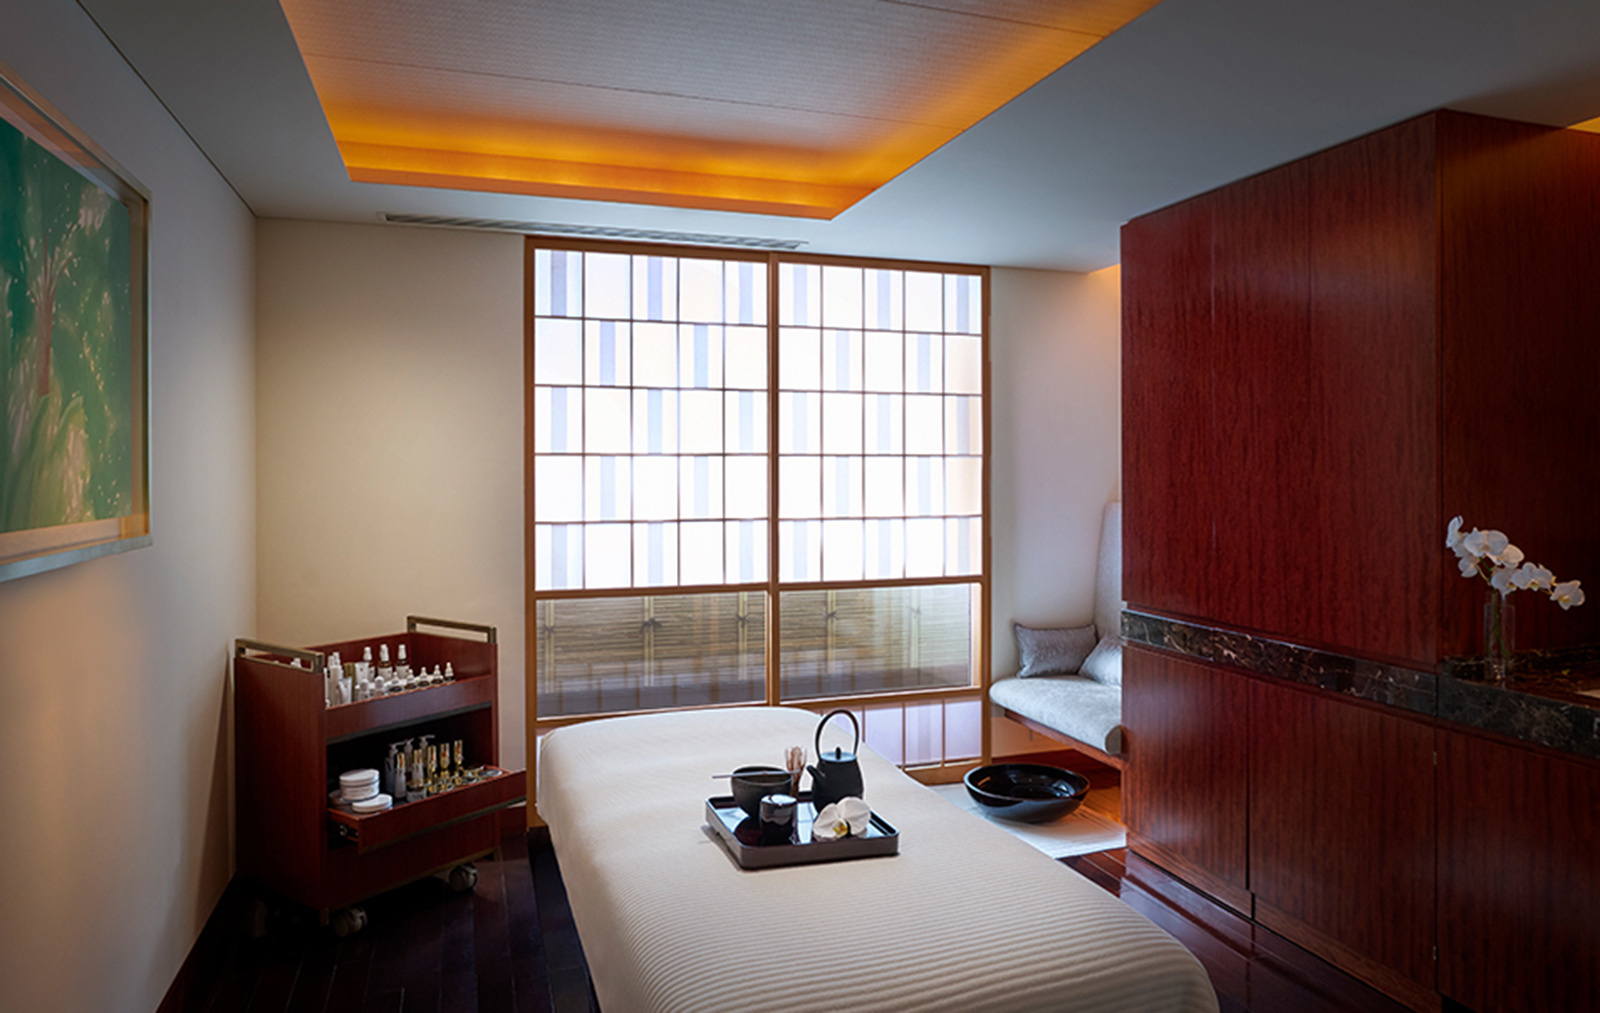 The Peninsula Tokyo spa treatment room interior